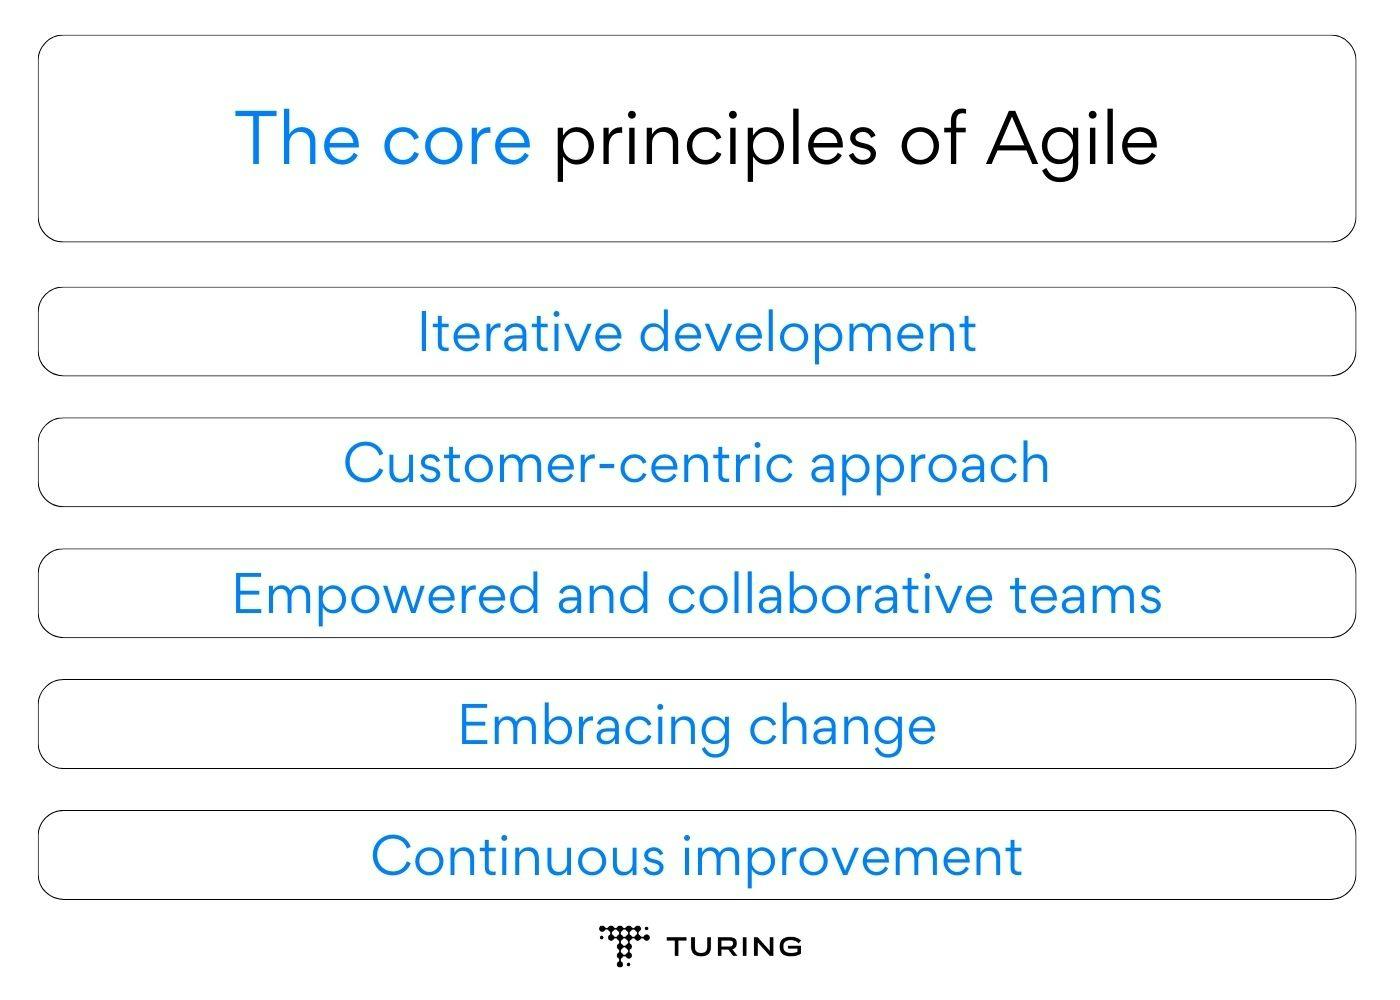 The core principles of Agile